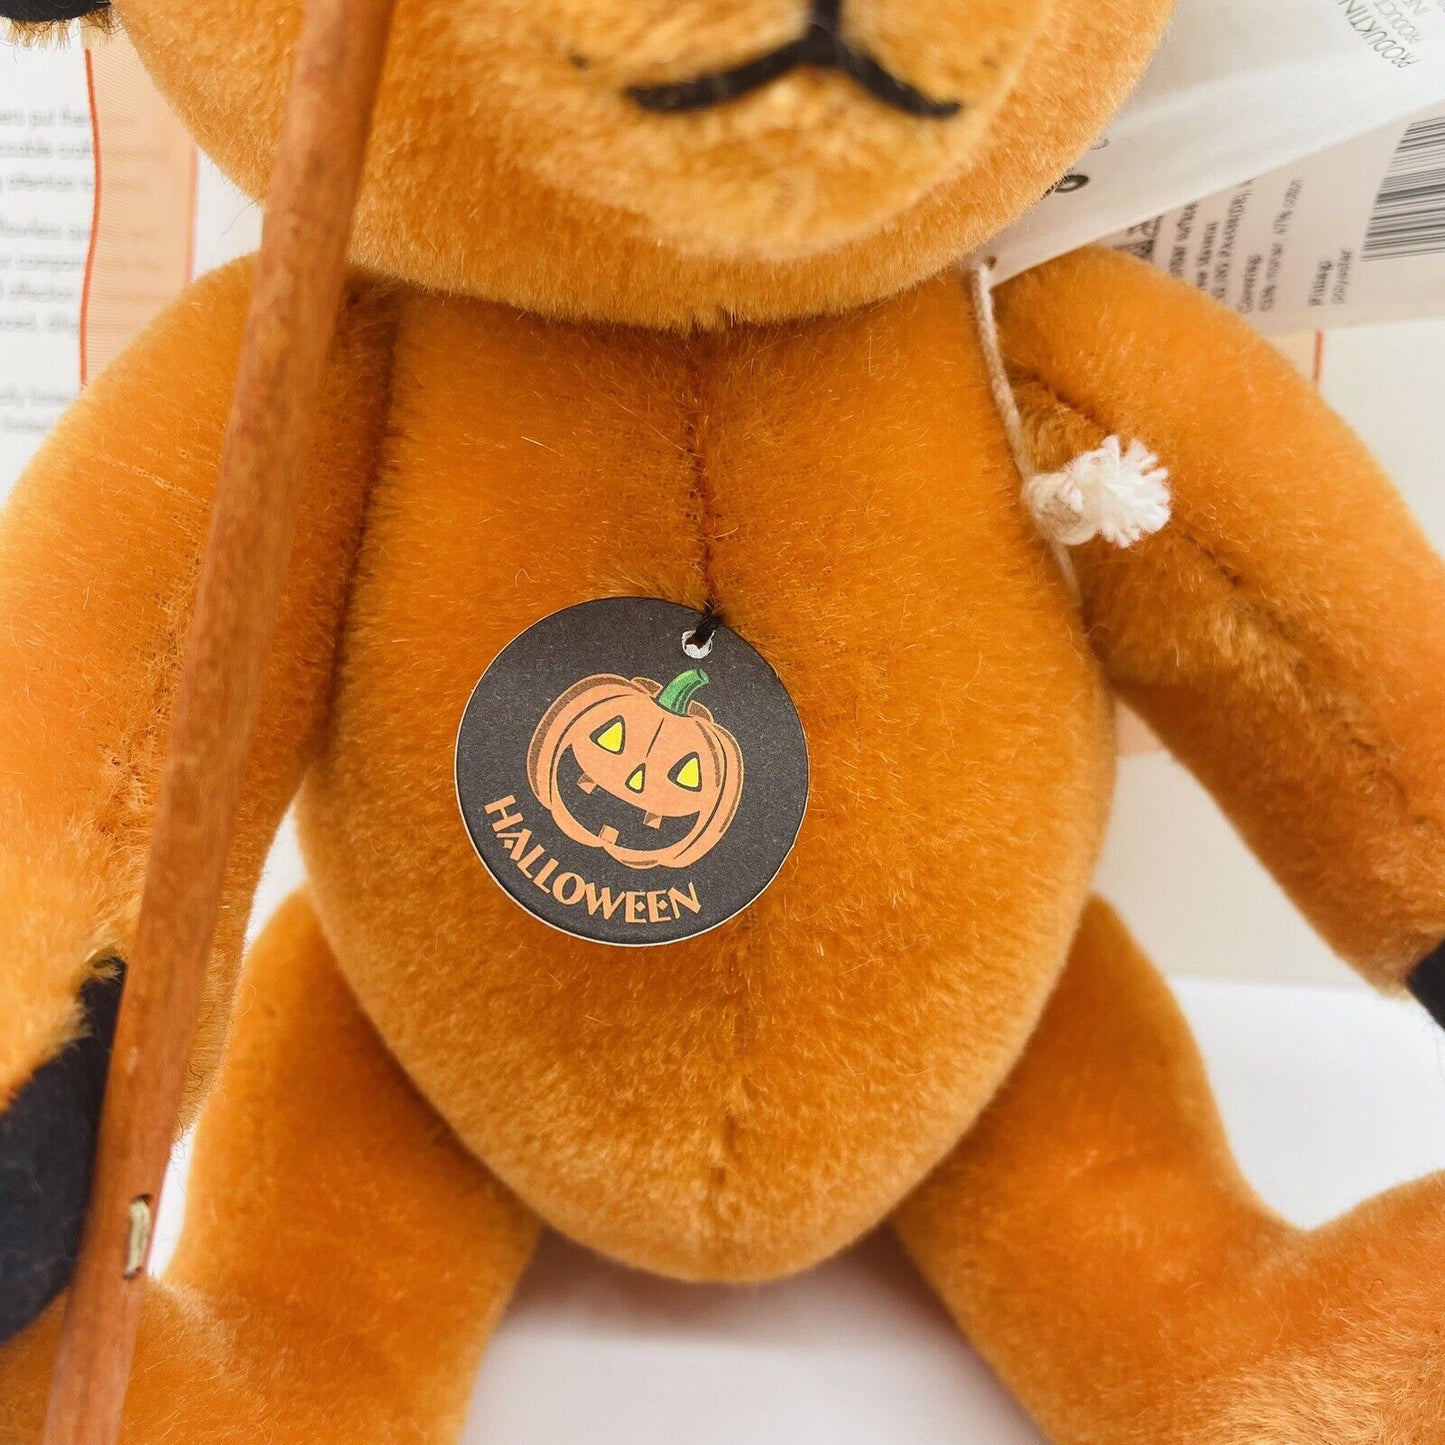 Steiff Teddybär Halloween Bear 678202 limitiert 1500 aus 2016 28cm Japan